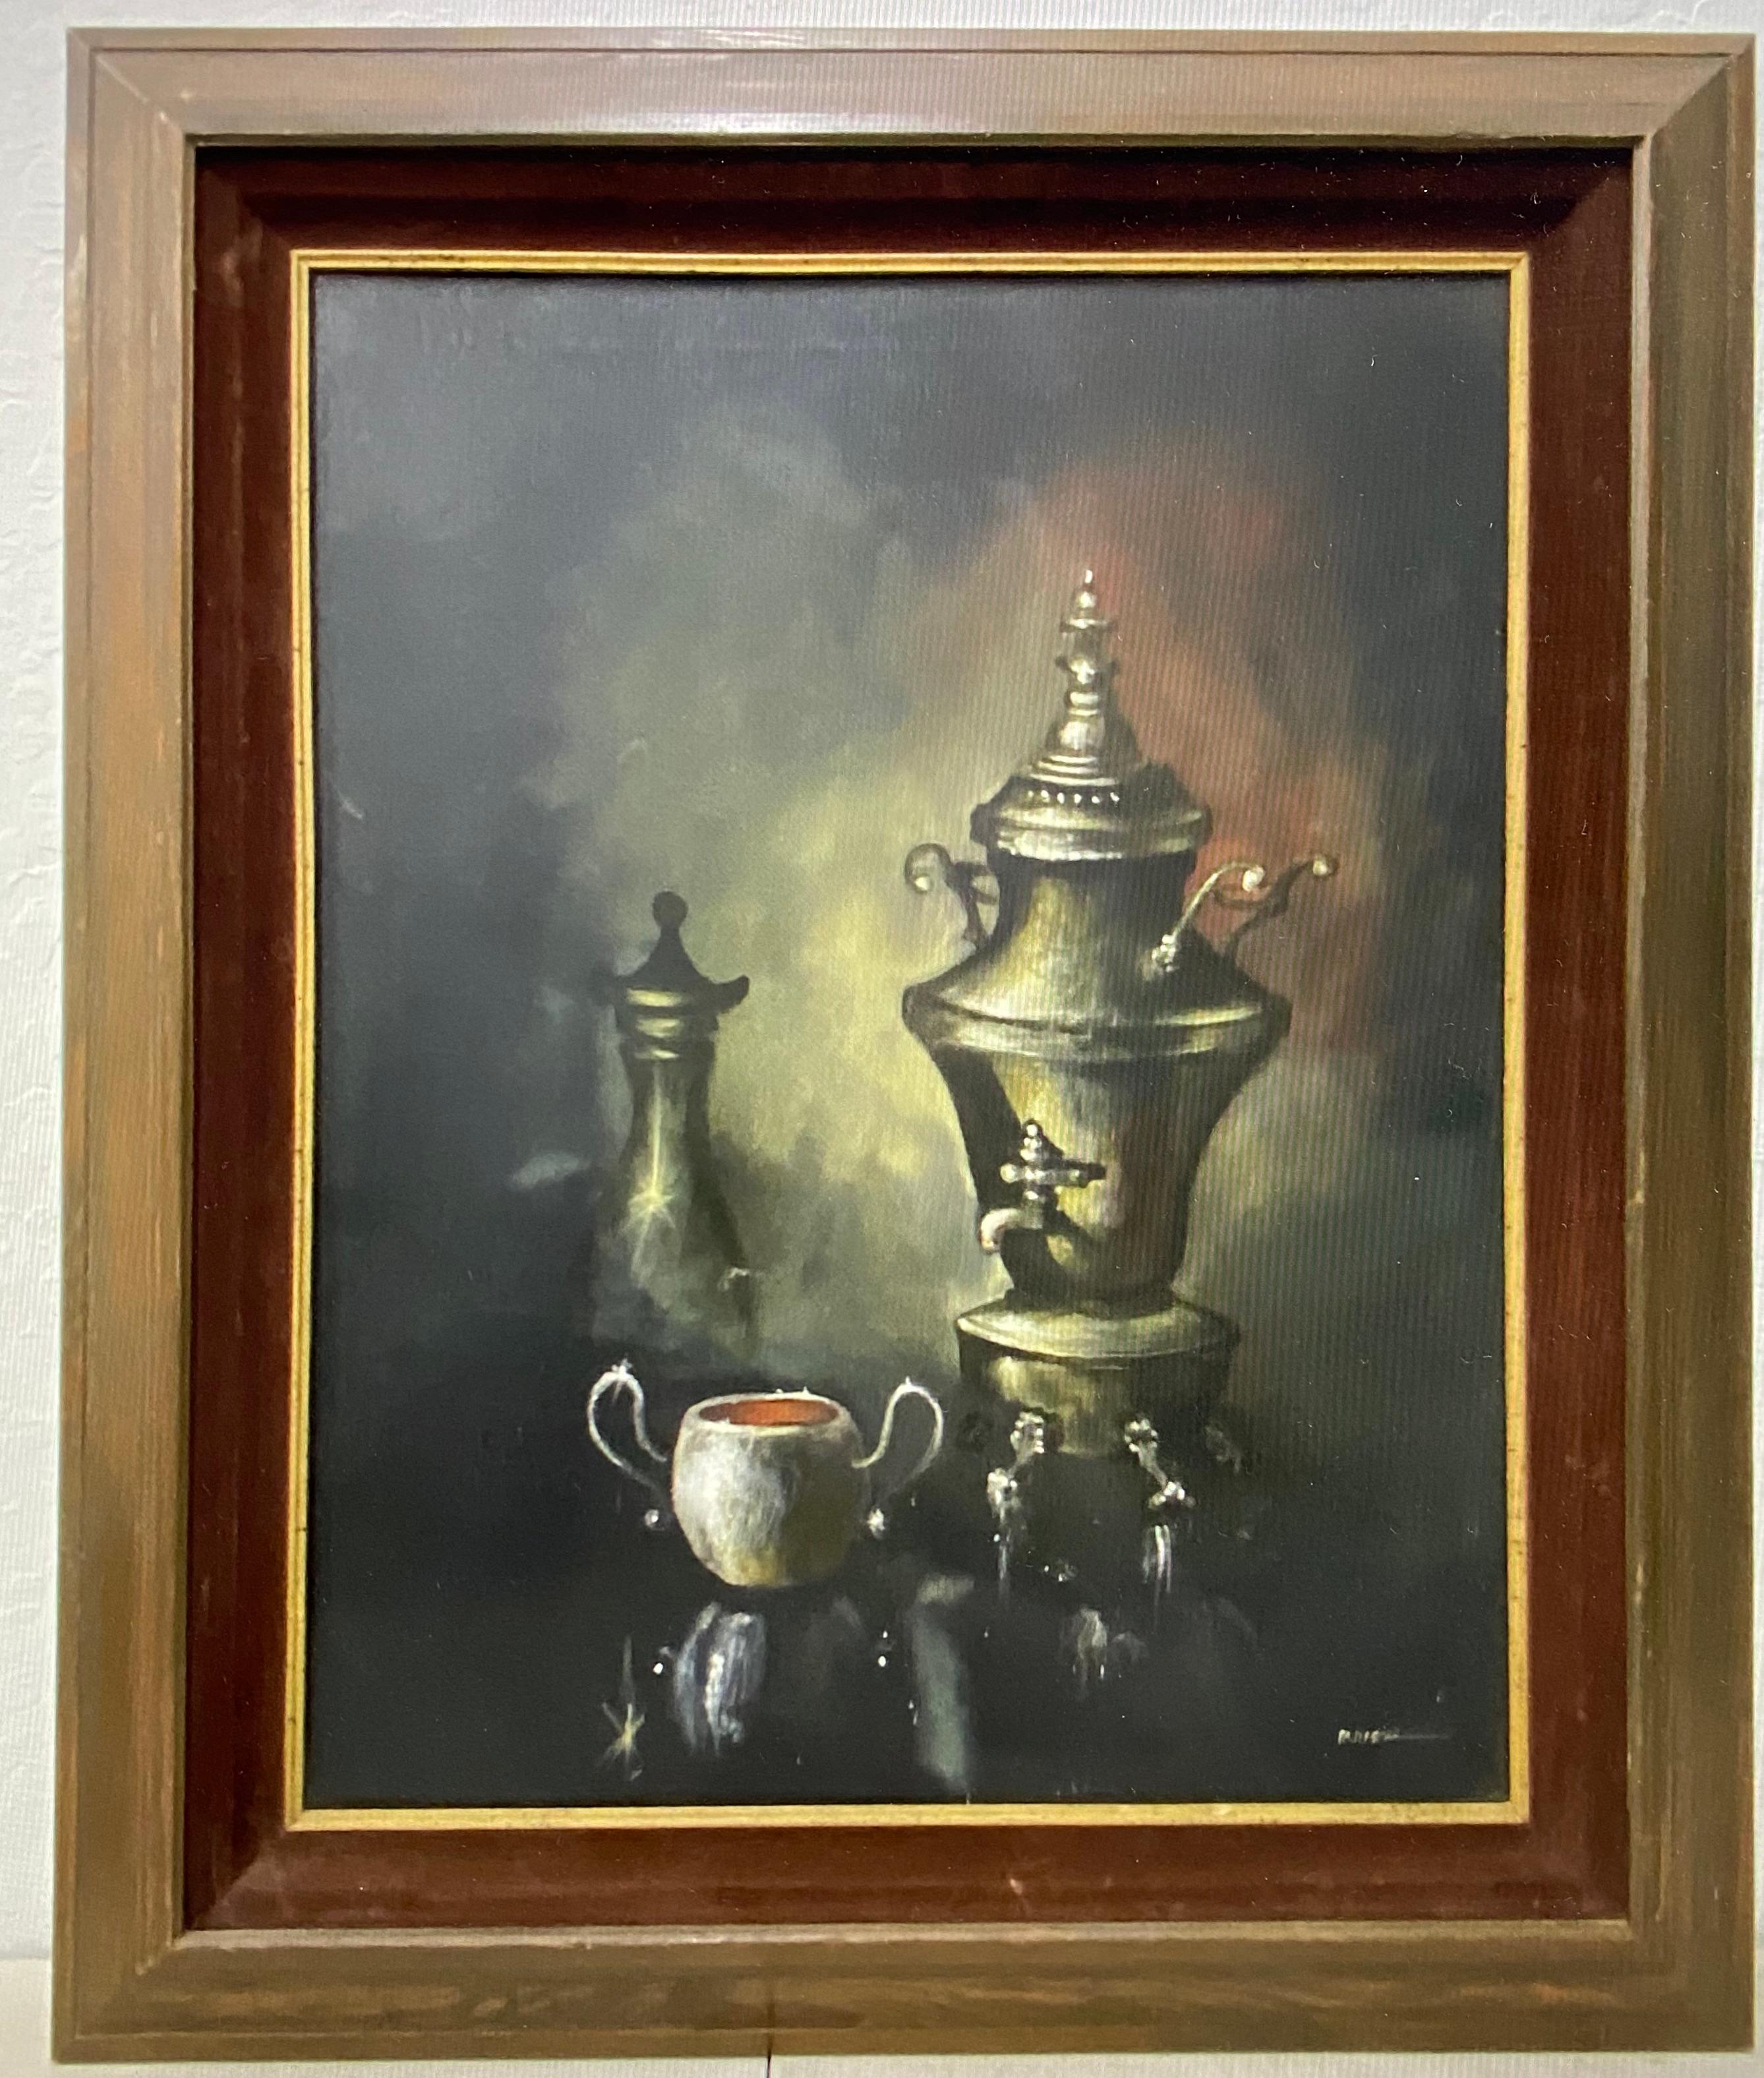 Vintage Original Still Life Oil Painting W/ Silver Coffee Chafer by Parisch C.19